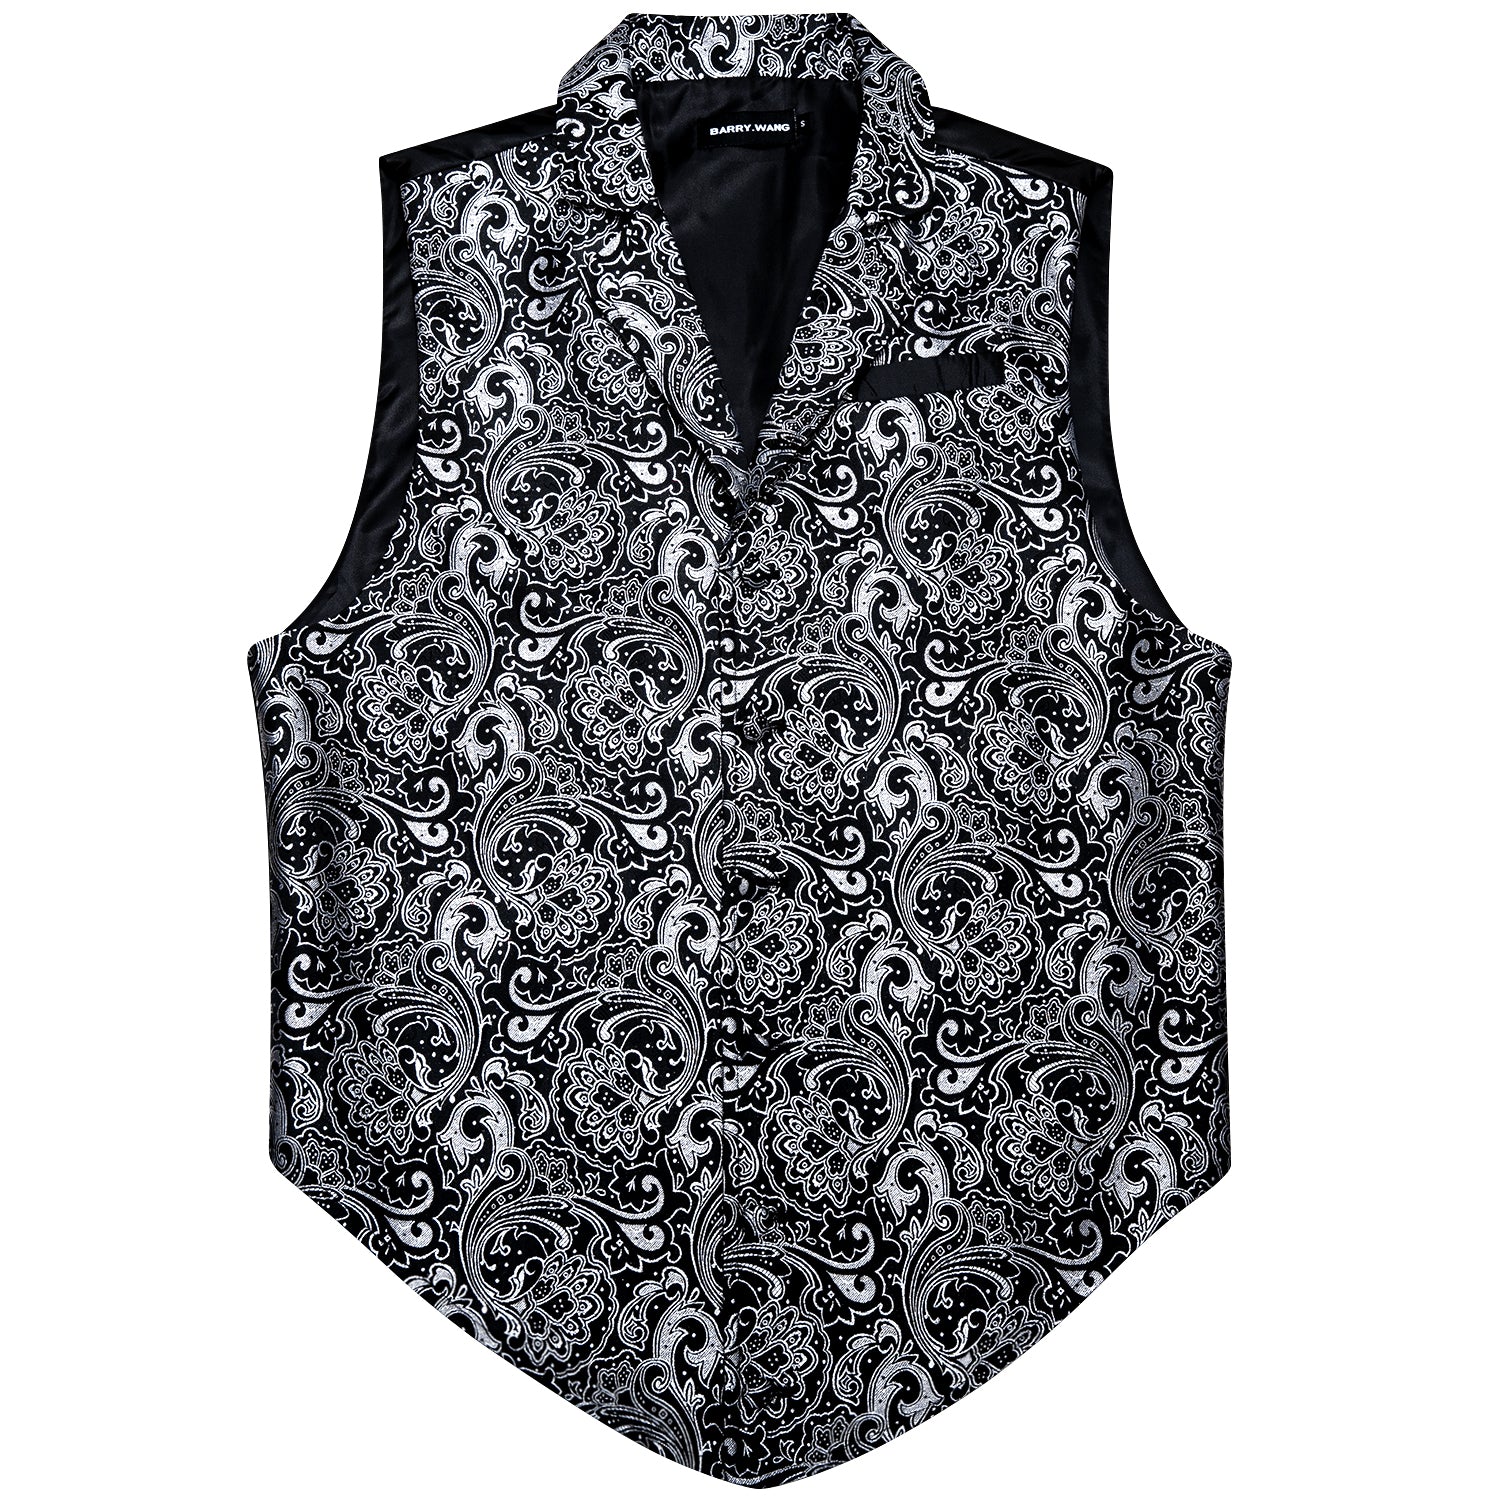 Luxury Men's Black White Jacquard Floral Silk Waistcoat Vest